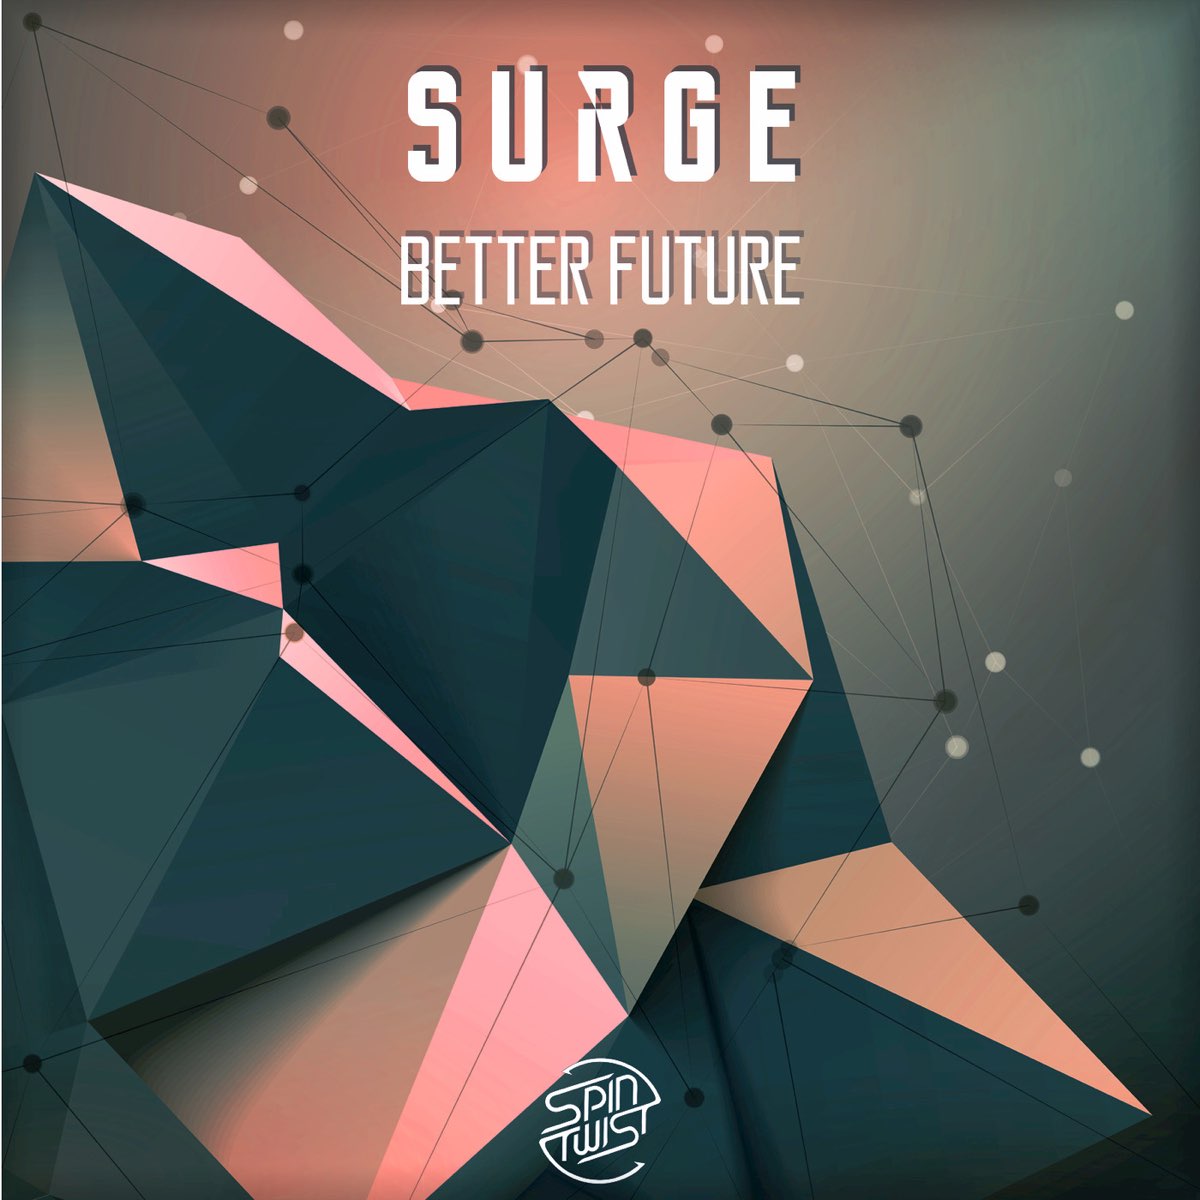 Future goods. Better альбом. Better Future. Best Future. Surge Music.